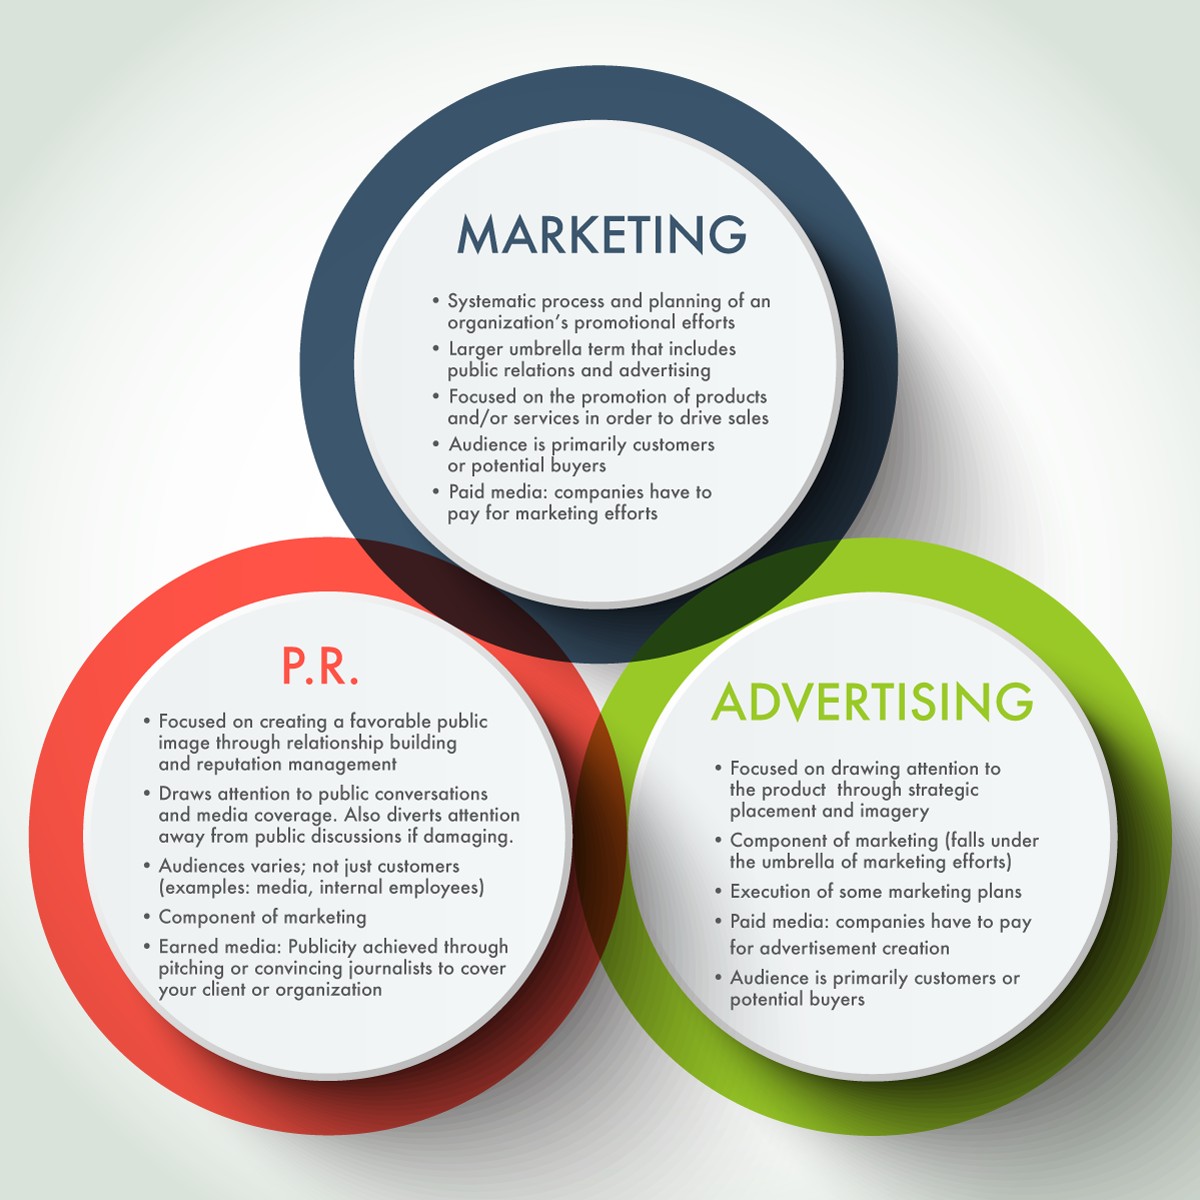 A venn diagram of marketing, P.R. and Advertising